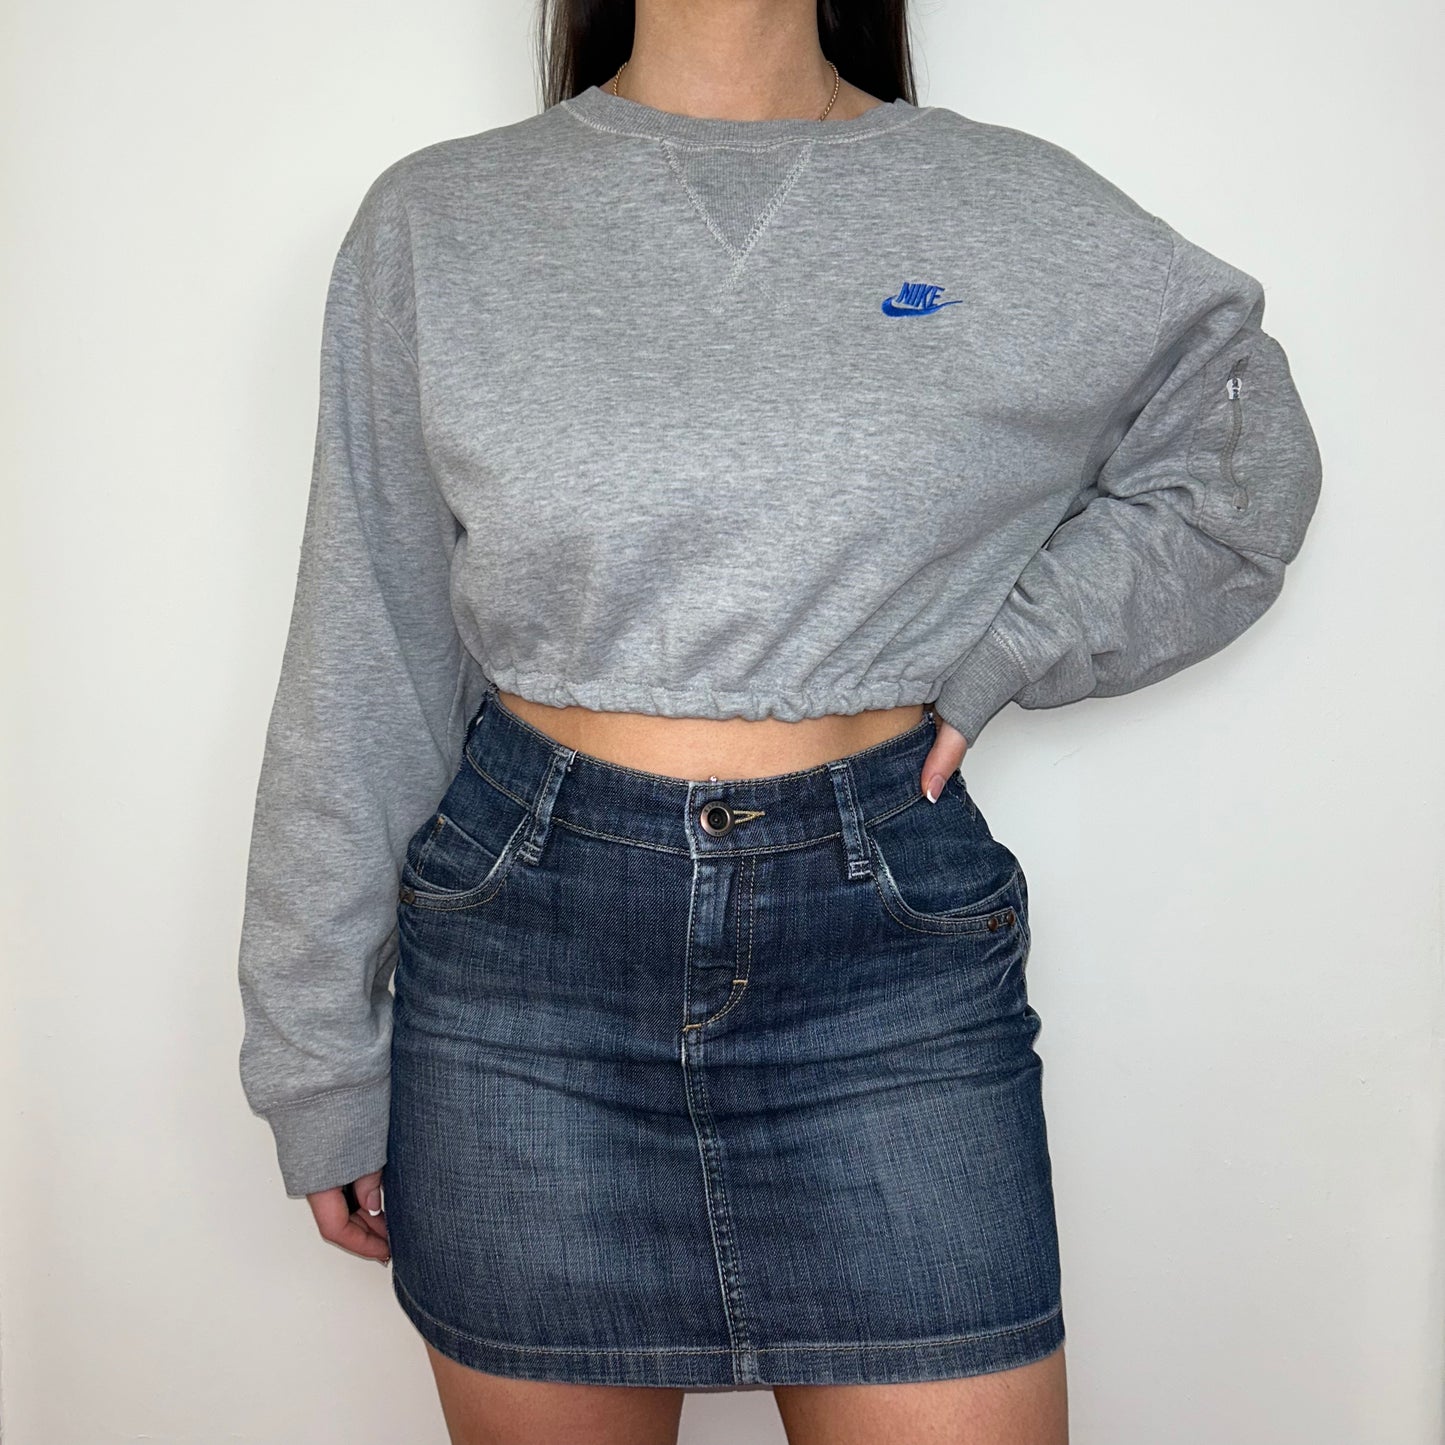 grey cropped sweatshirt with blue nike logo shown on a model wearing a blue denim mini skirt